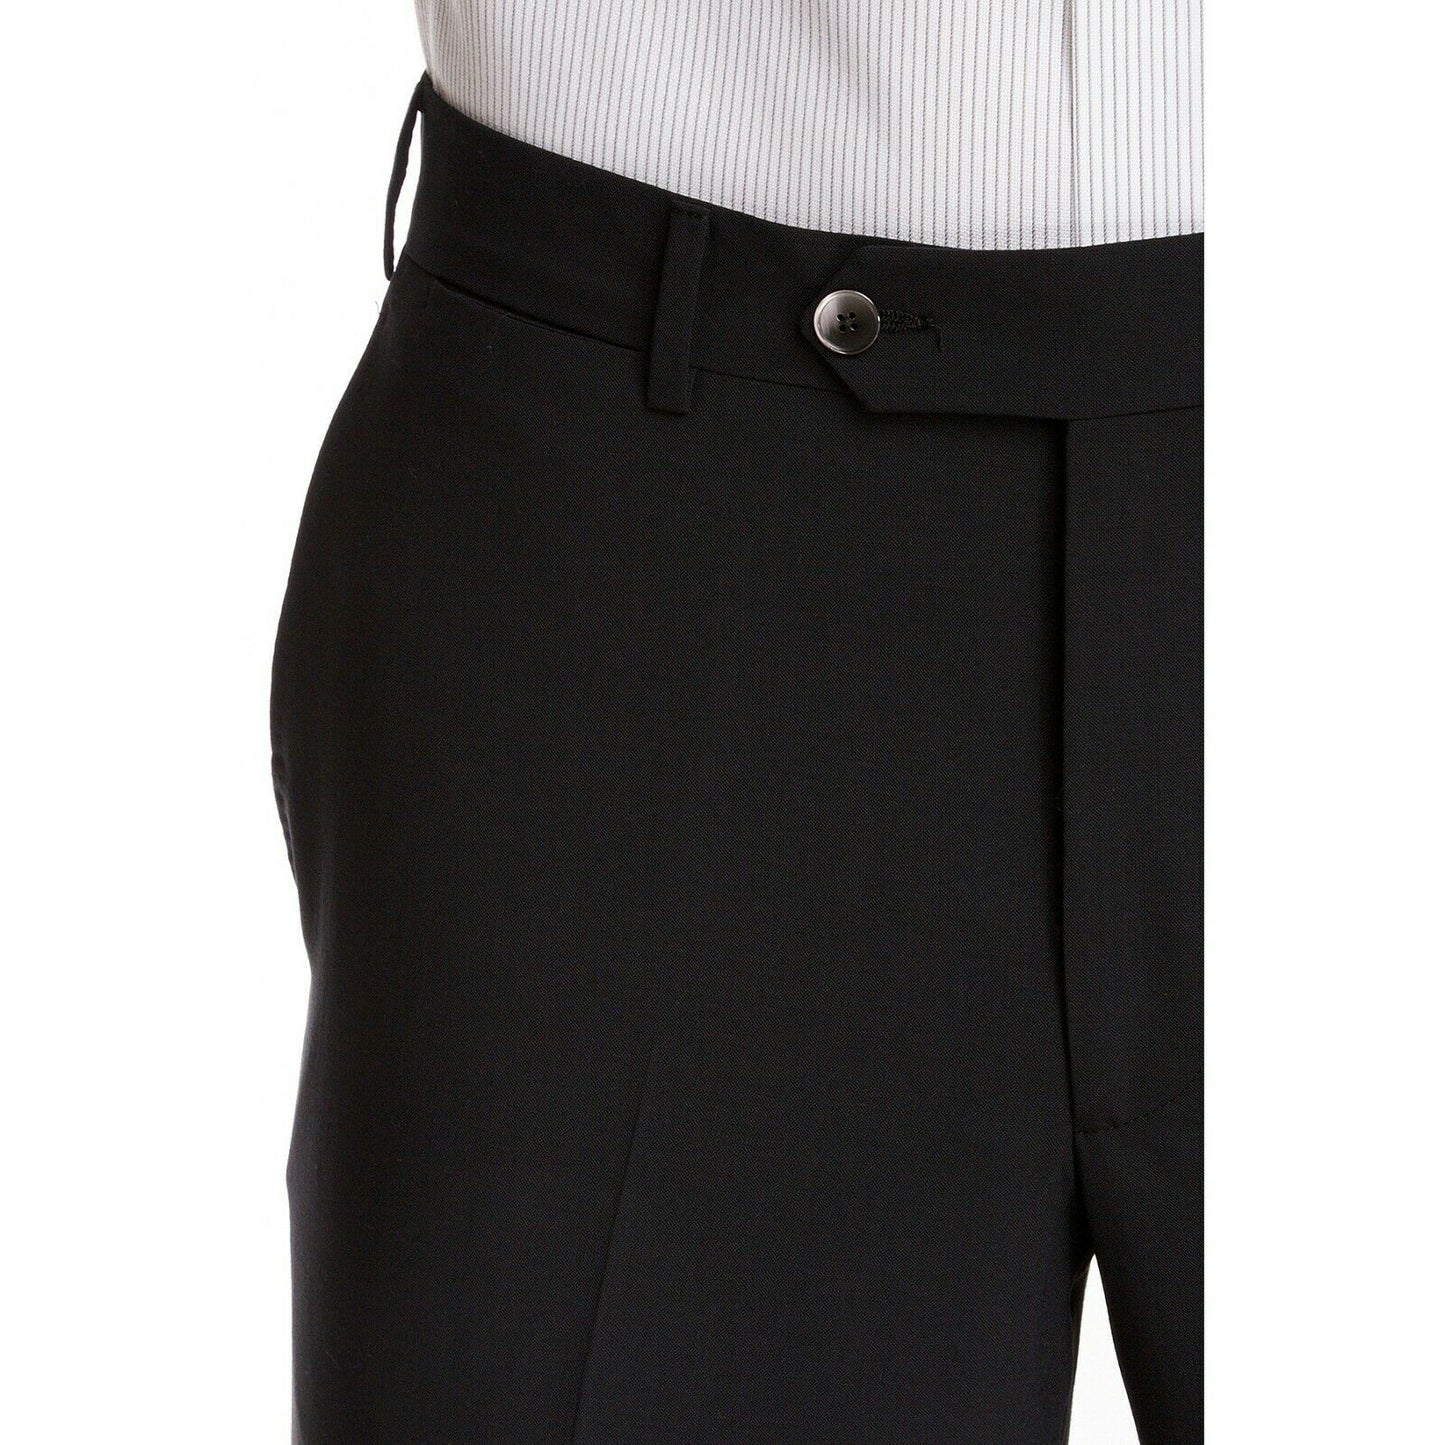 Ike Behar Mens Wool Flat Front Dress Suit Slacks Pants Black 34 NWT